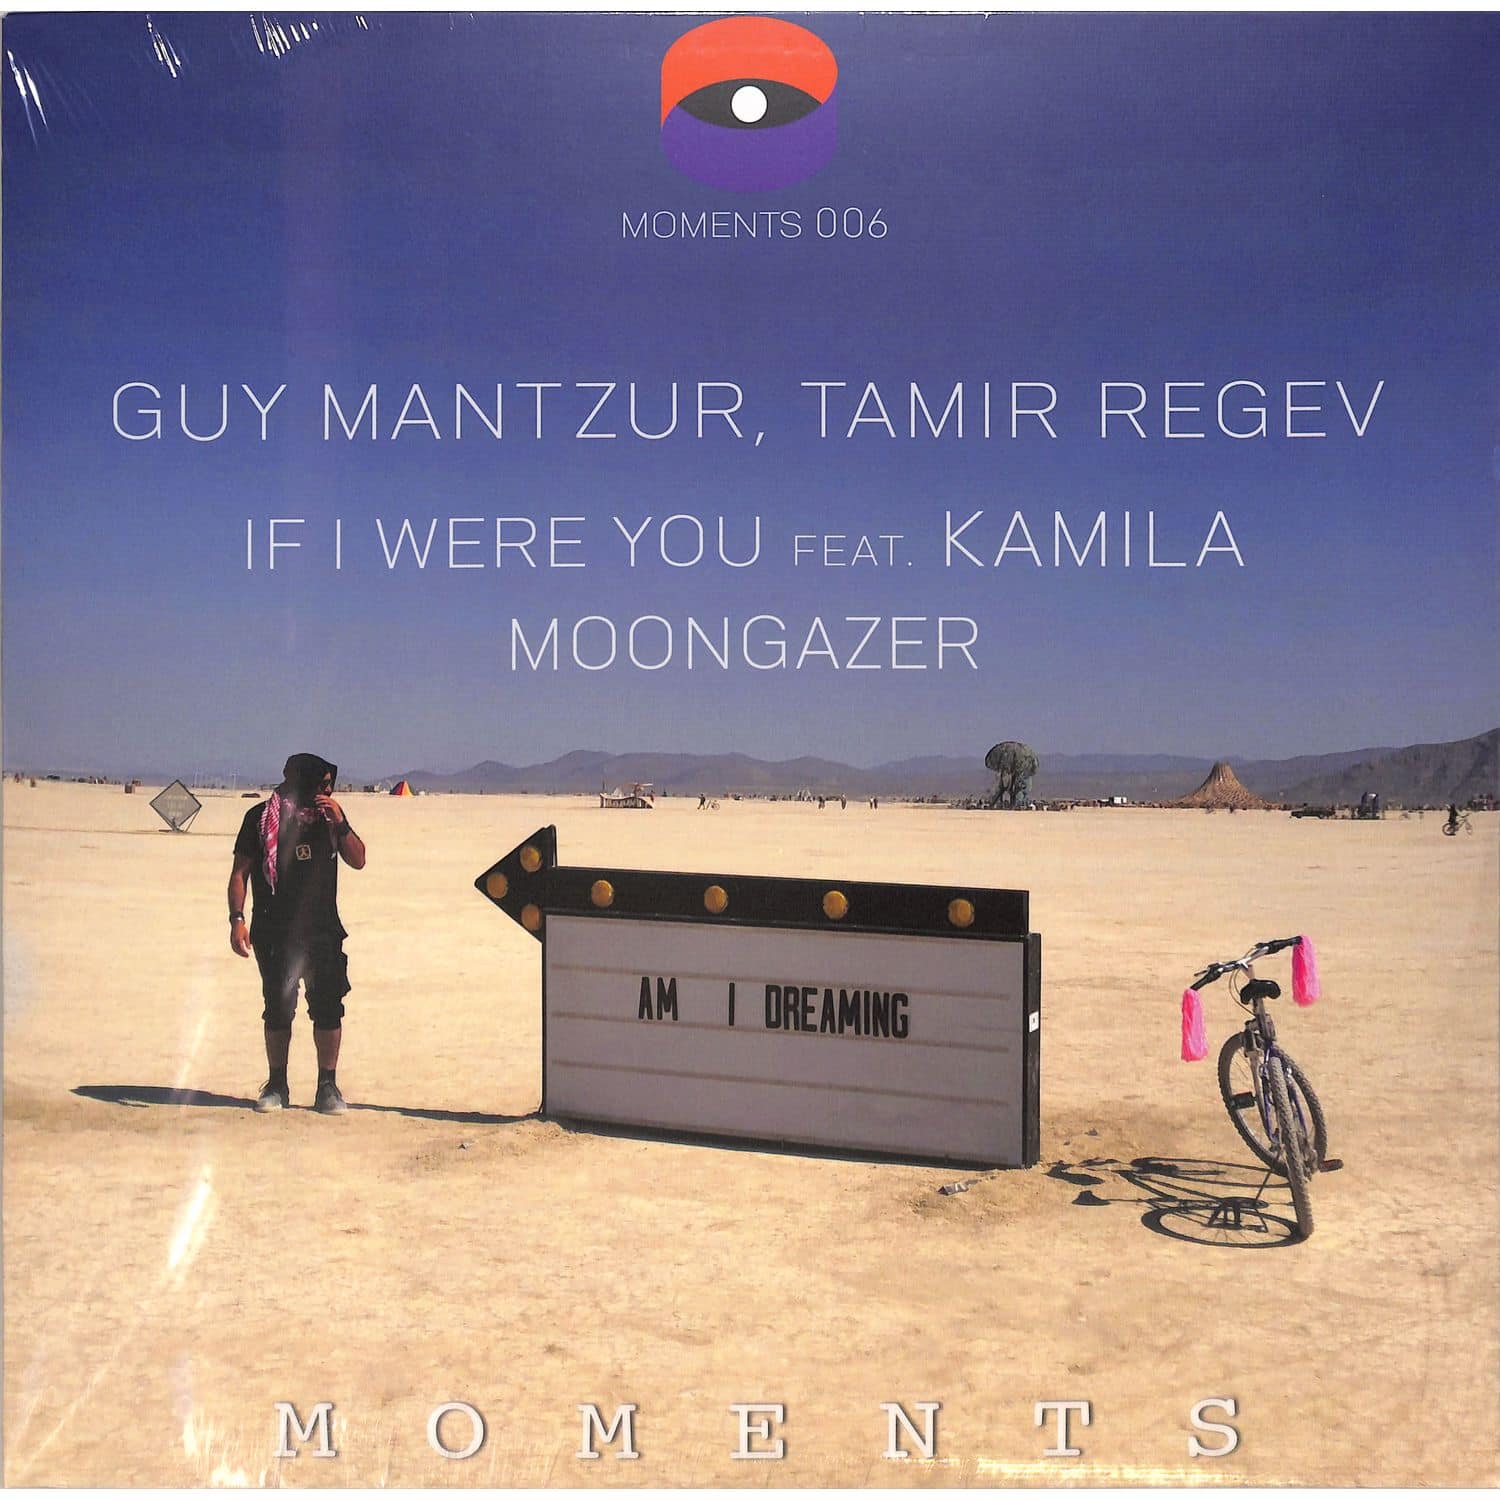 Guy Mantzur / Tamir Regev - IF I WERE YOU FEAT KAMILA / MOONGAZER